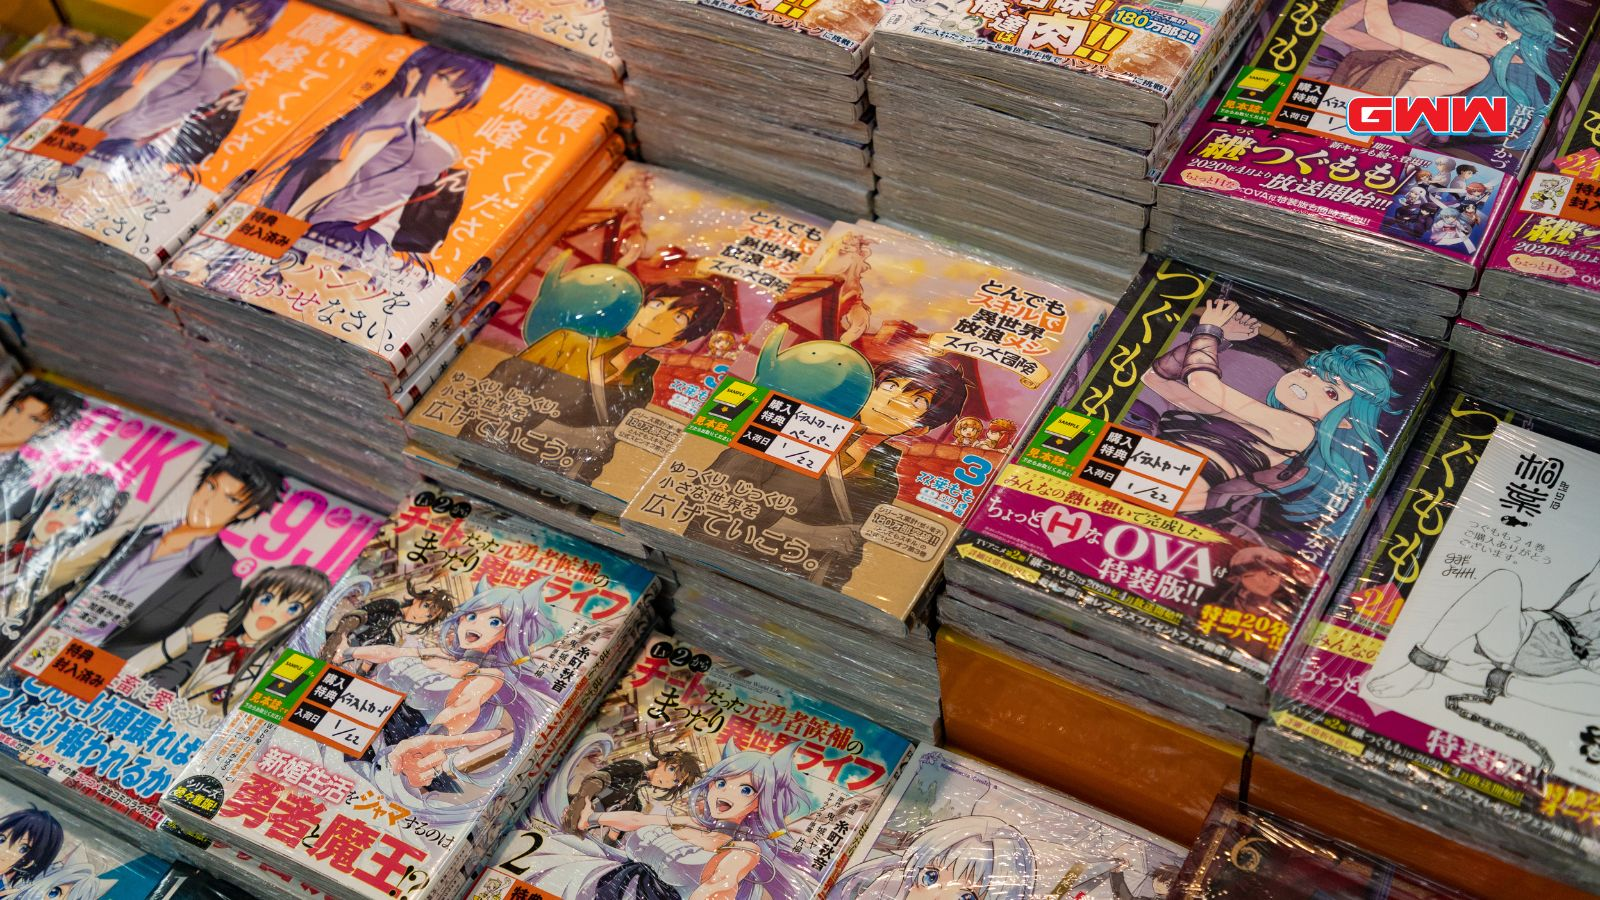 Stacks of manga comics for free browsing